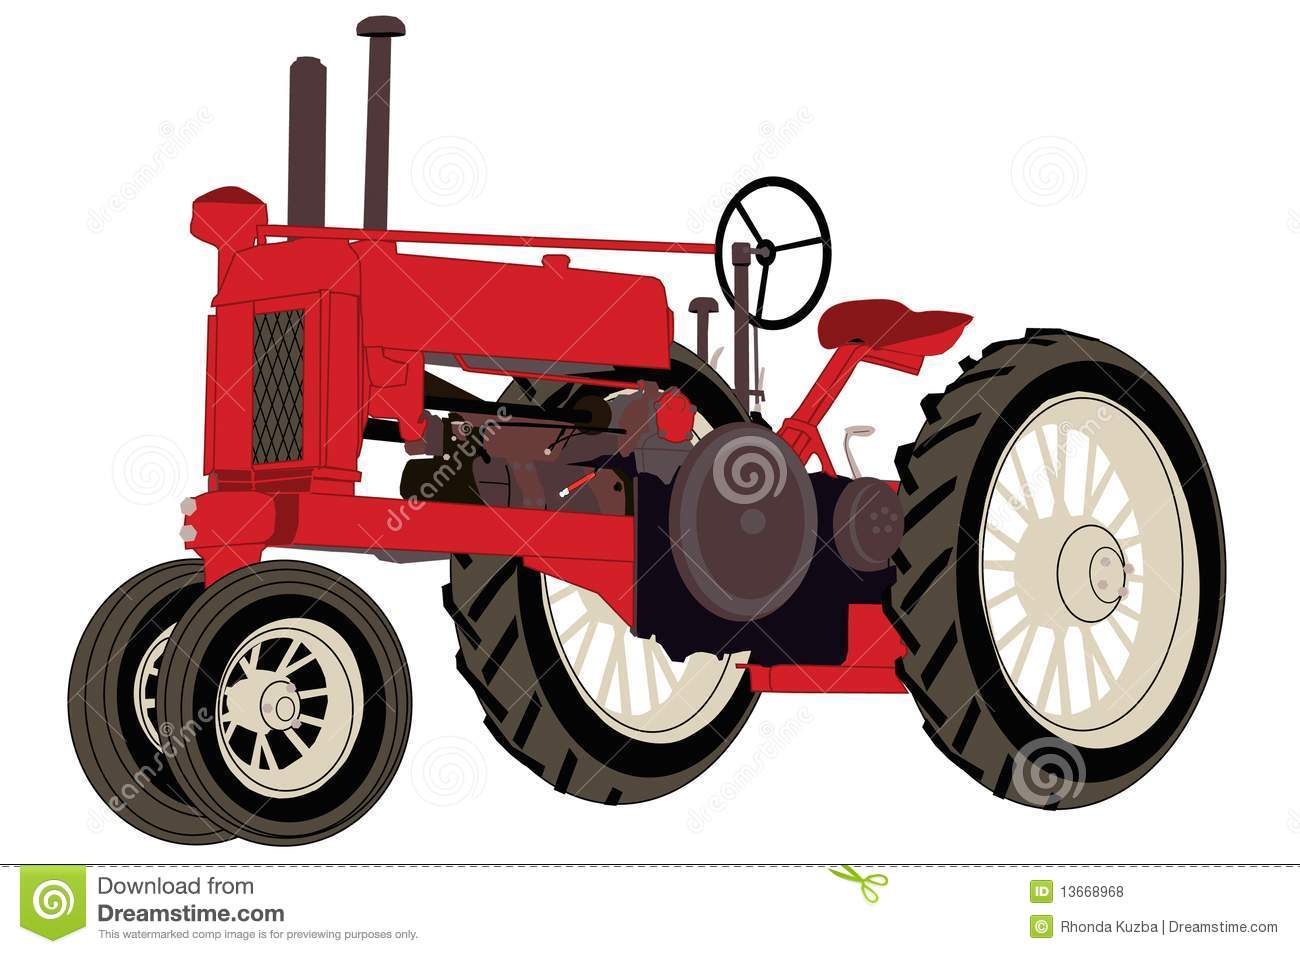 Antique Farm Tractor Royalty Free Stock Photos   Image  13668968